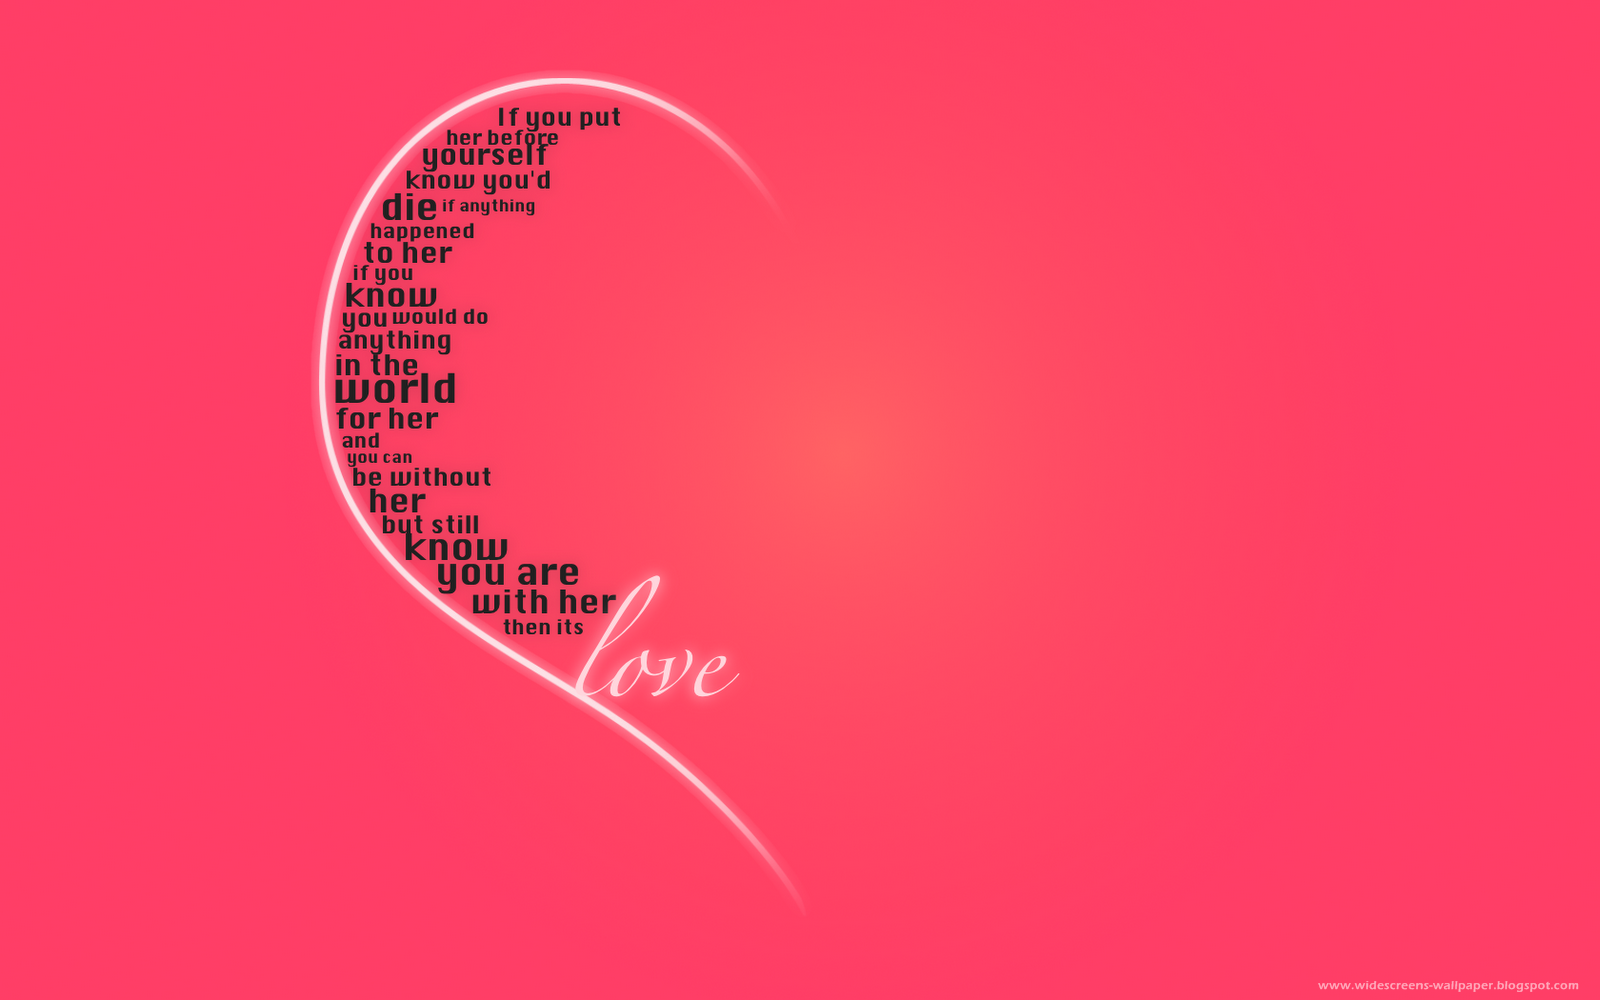 48+] True Love Wallpaper with Quotes - WallpaperSafari